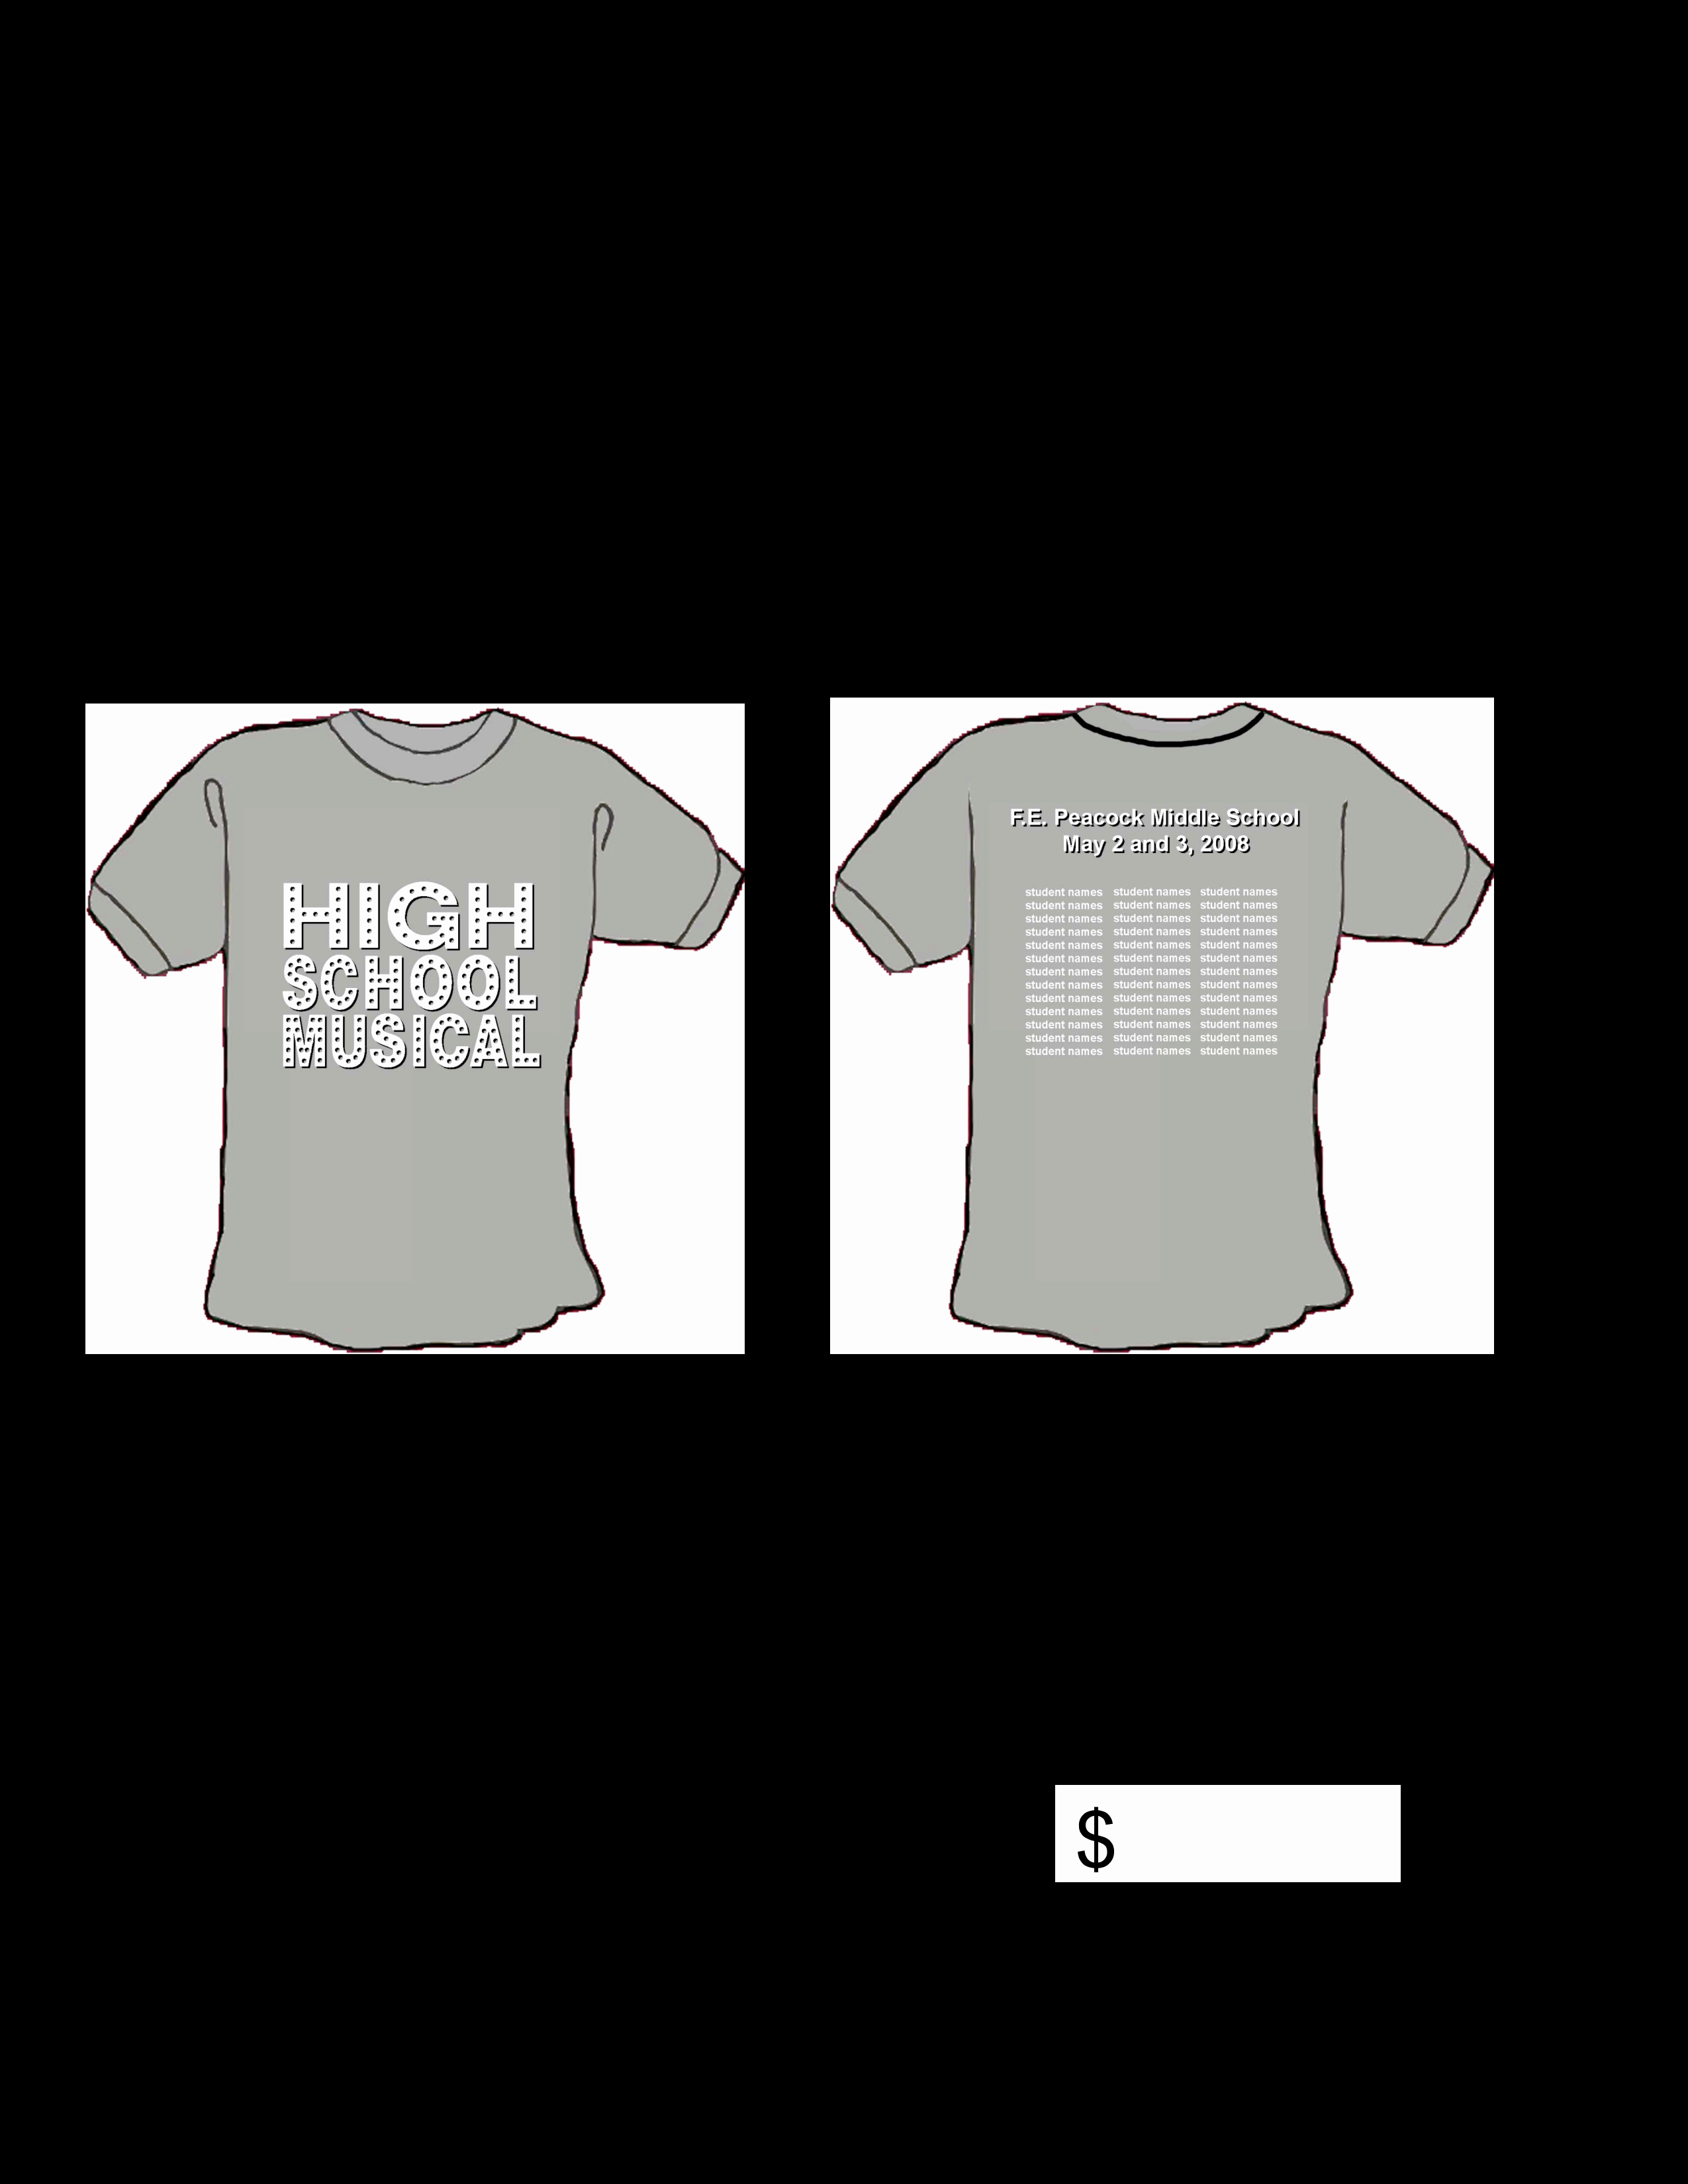 School Photo order form Template Fresh High School T Shirt order form